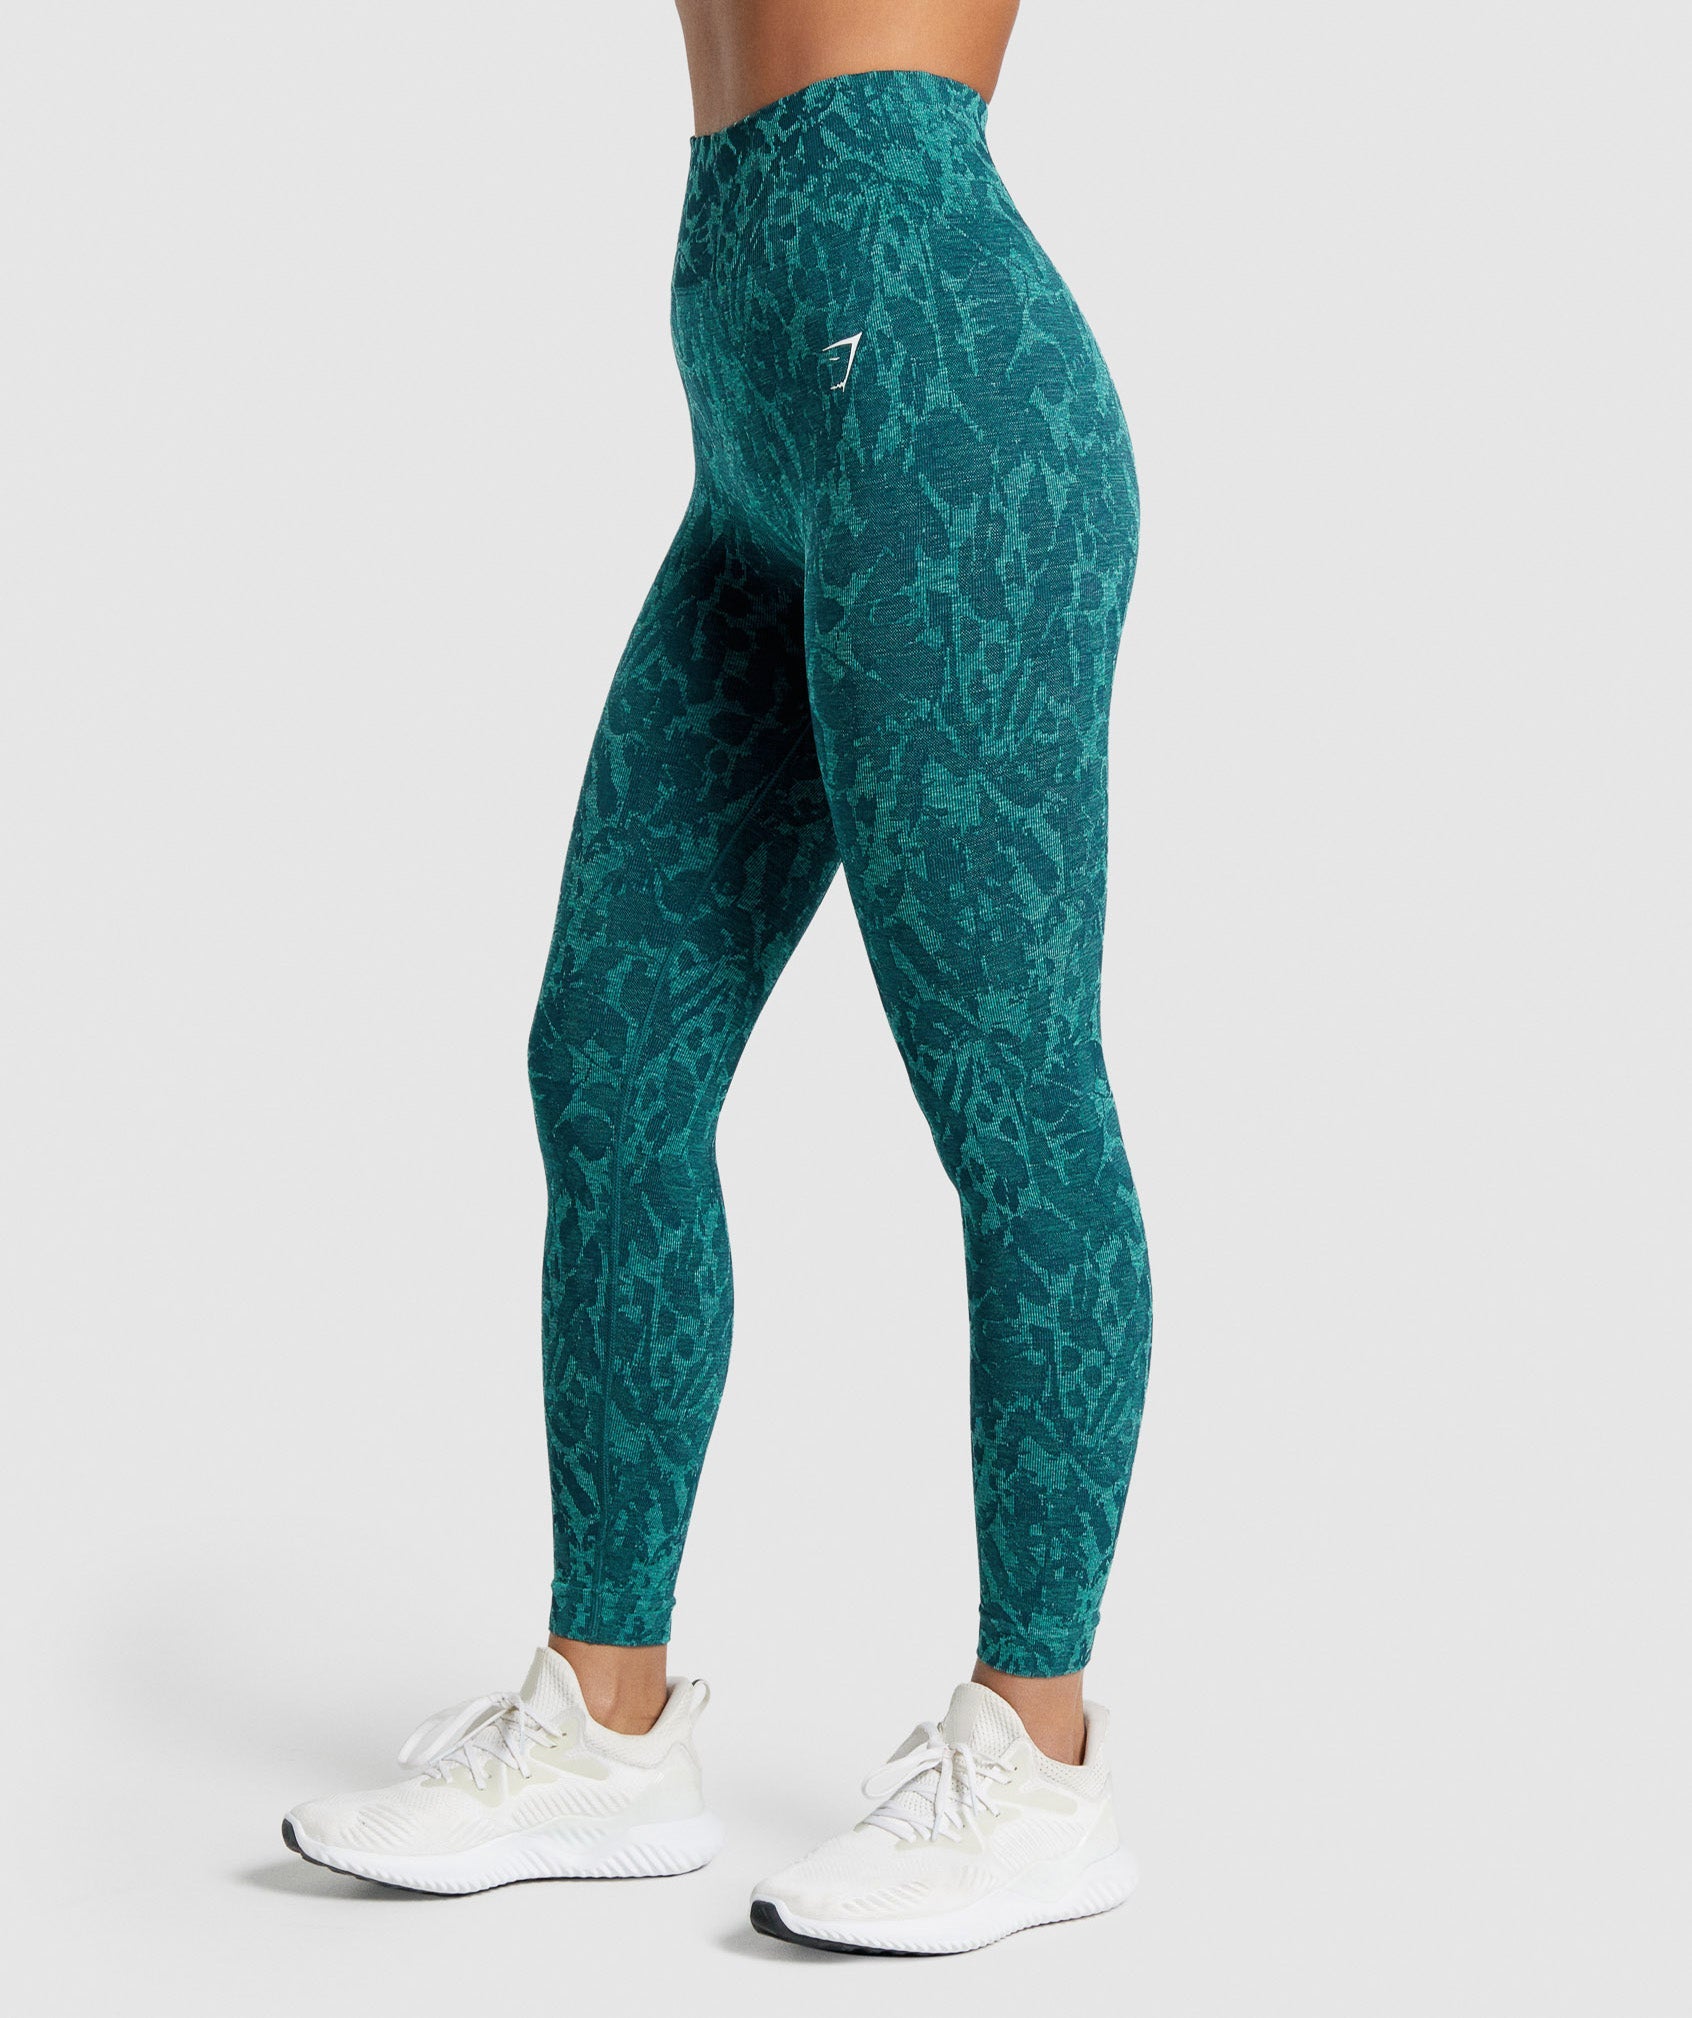 Butterfly Colorful 3D Printed Hollow Tank Top & Leggings Set Fitness Female  Full Length Leggings yoga Running Pants DDK110